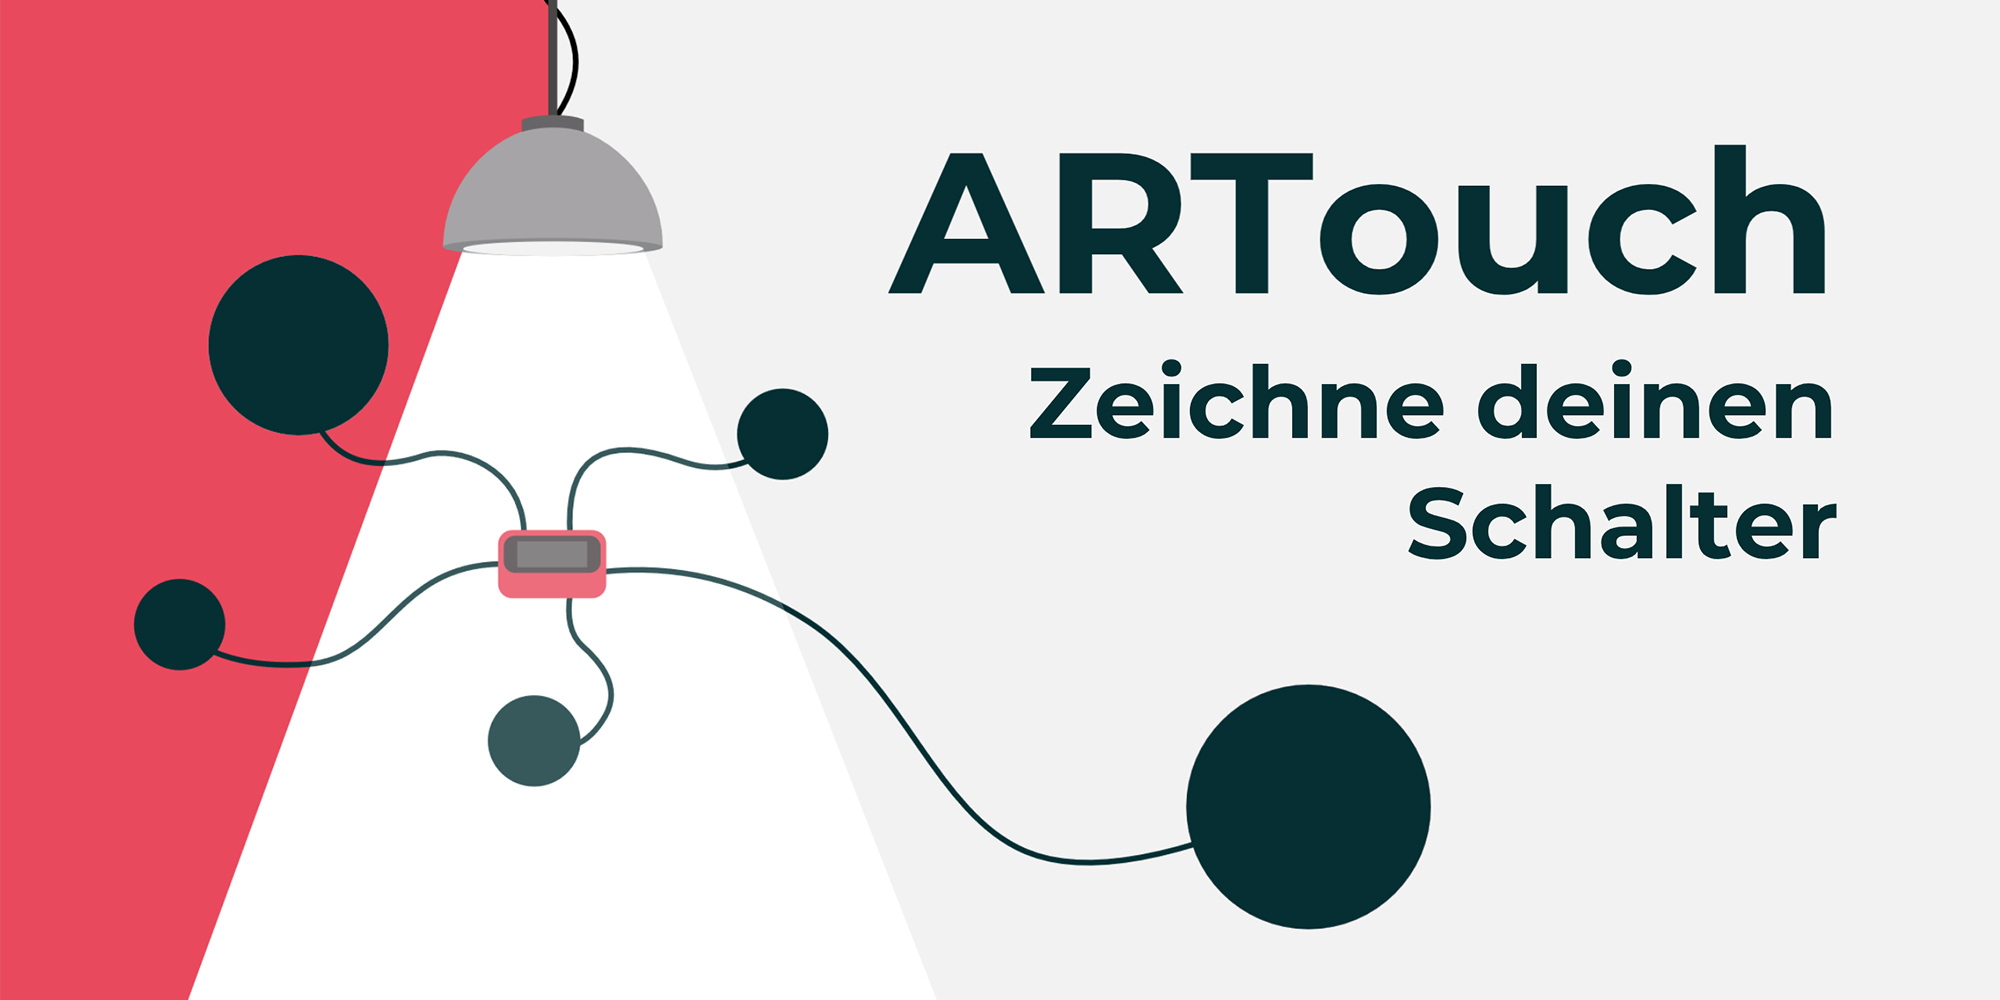 ARTouch, 2020, Jasmin Lersitz, Paul Rosenberger, Jonathan Wiener / HTL Rennweg (AT)